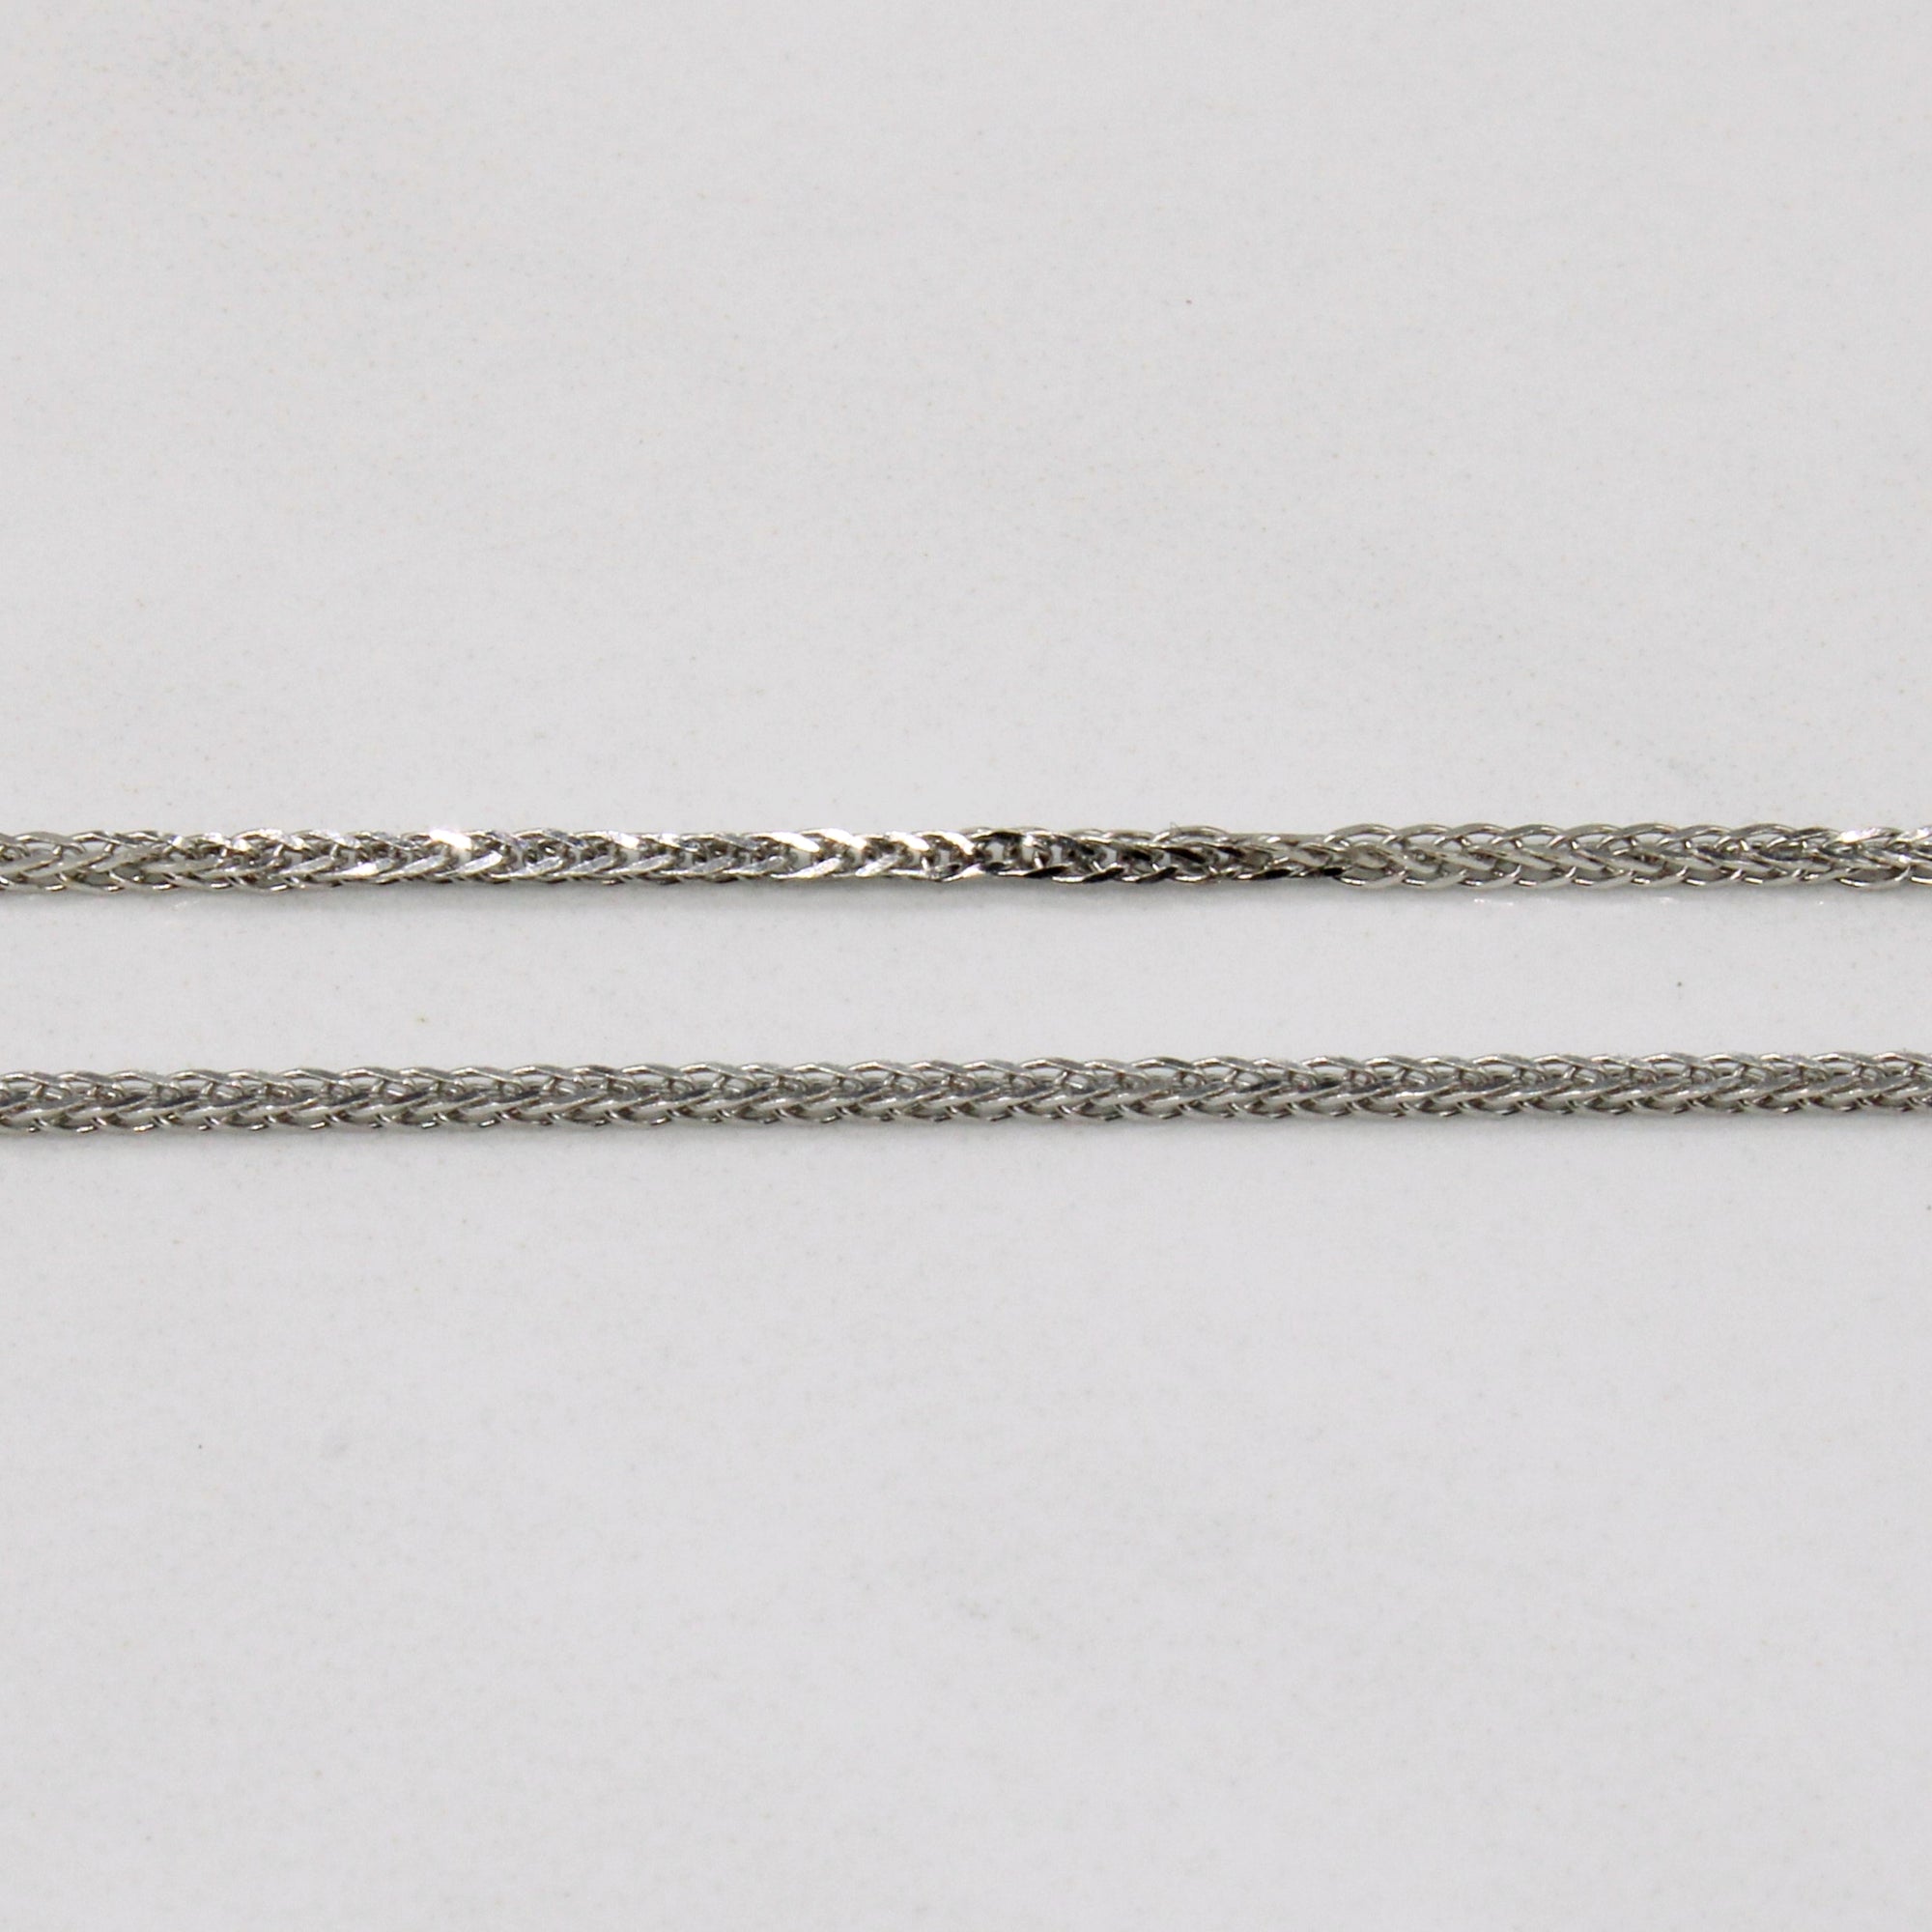 Diamond Heart Pendant & Necklace | 0.60ctw | 16